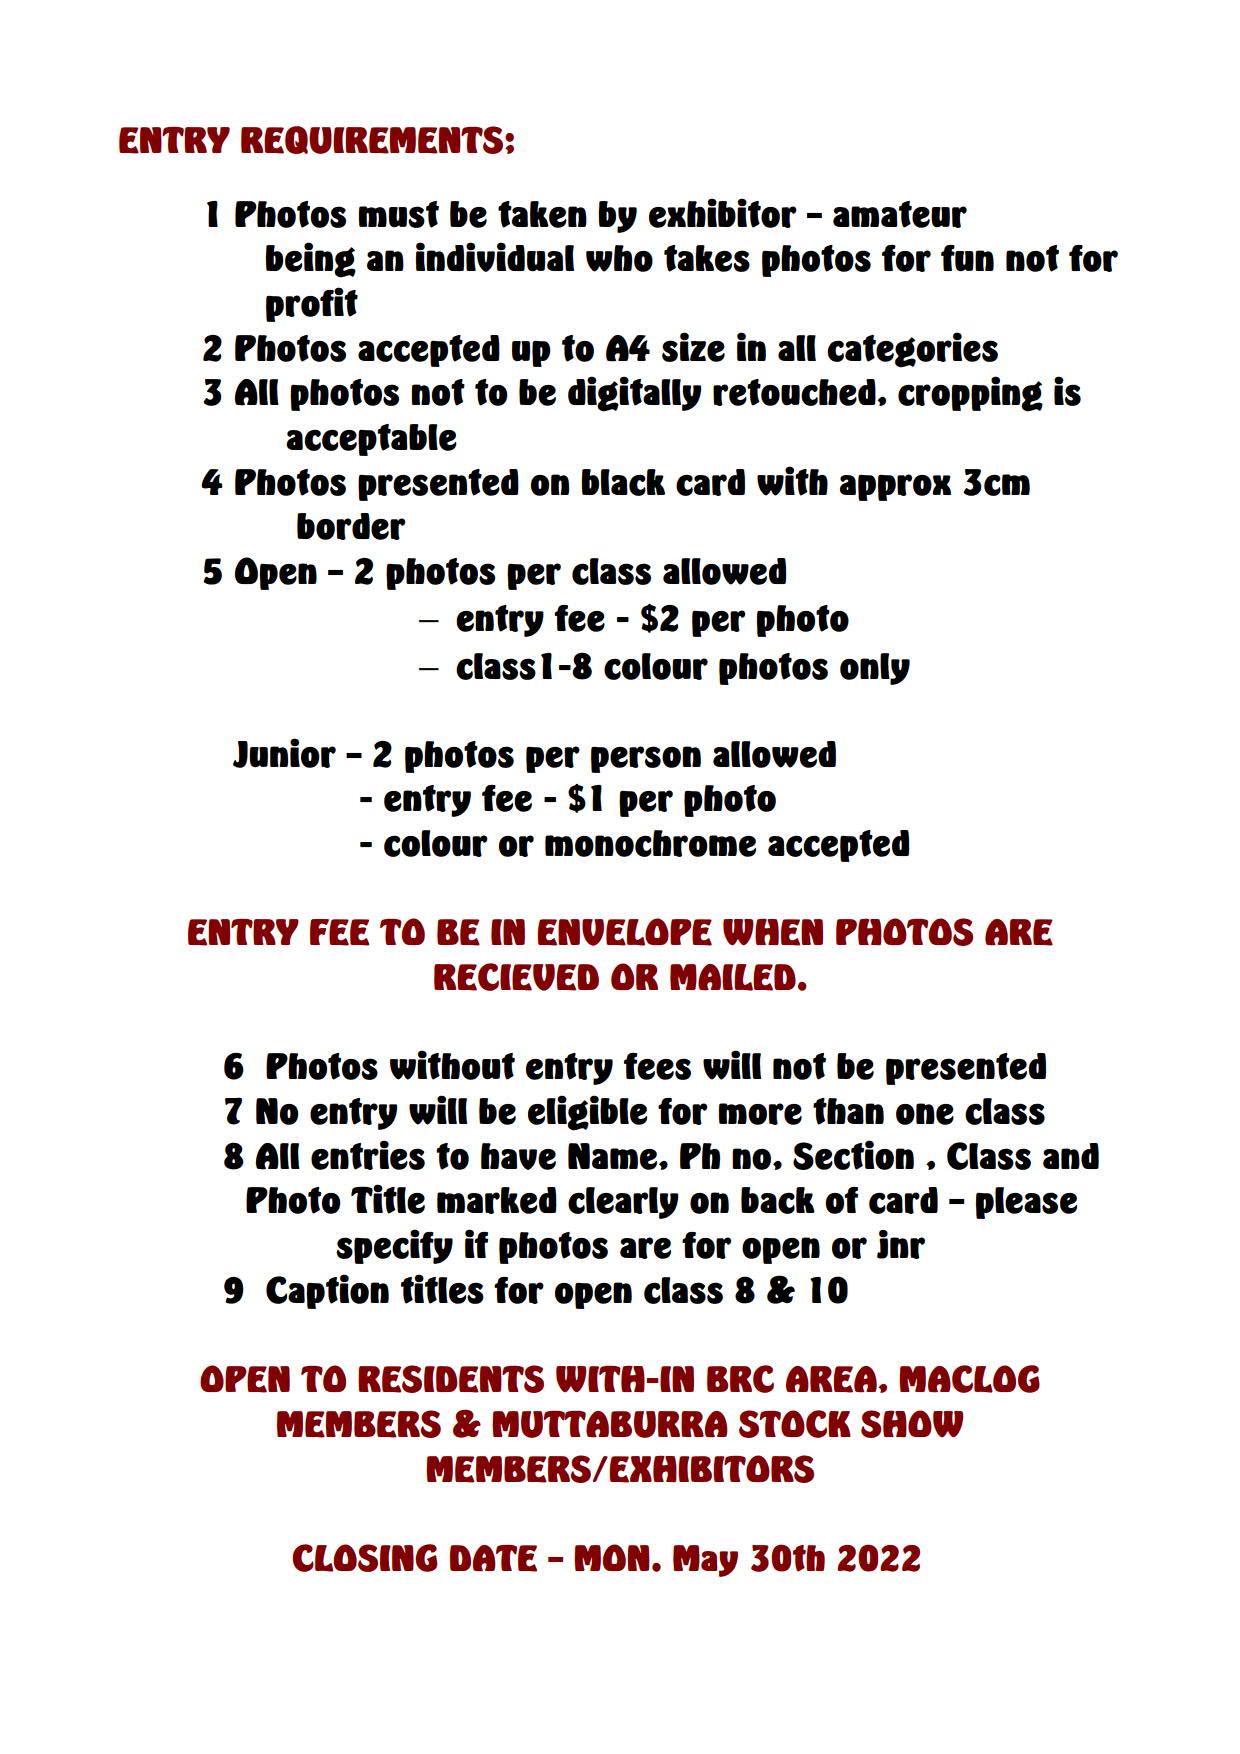 MACLOG Amateur Photo competition, Saturday 4 June 2022 Muttaburra Stock Show 2